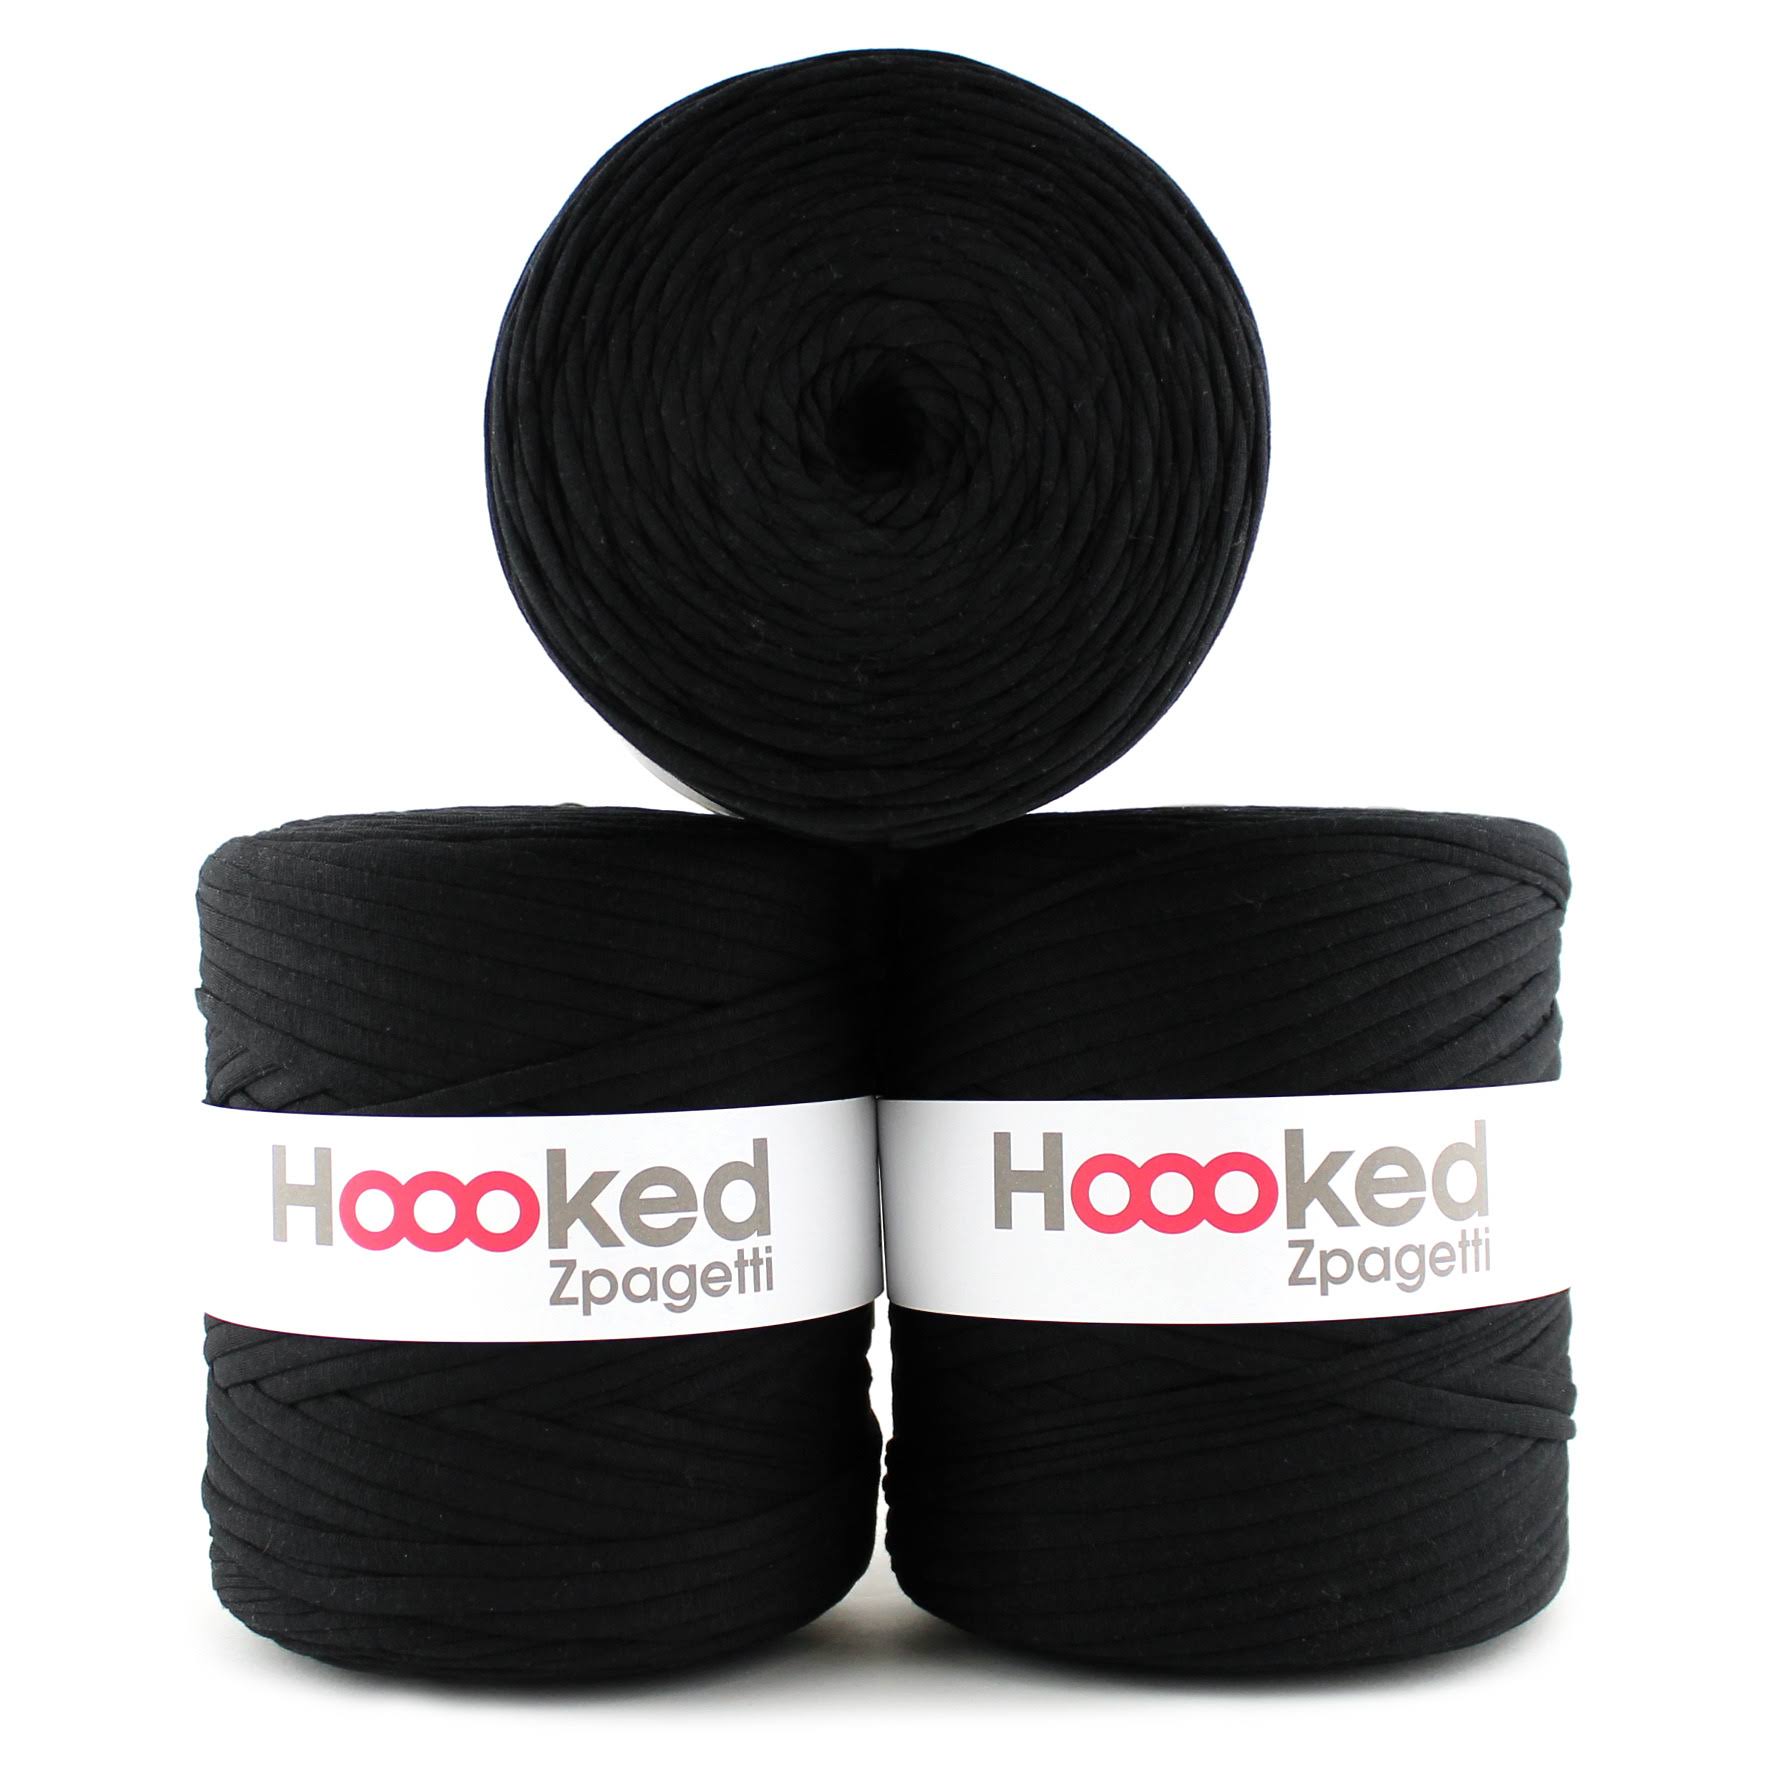 Hoooked Zpagetti Yarn - Classic Black - Pure Black Shades*